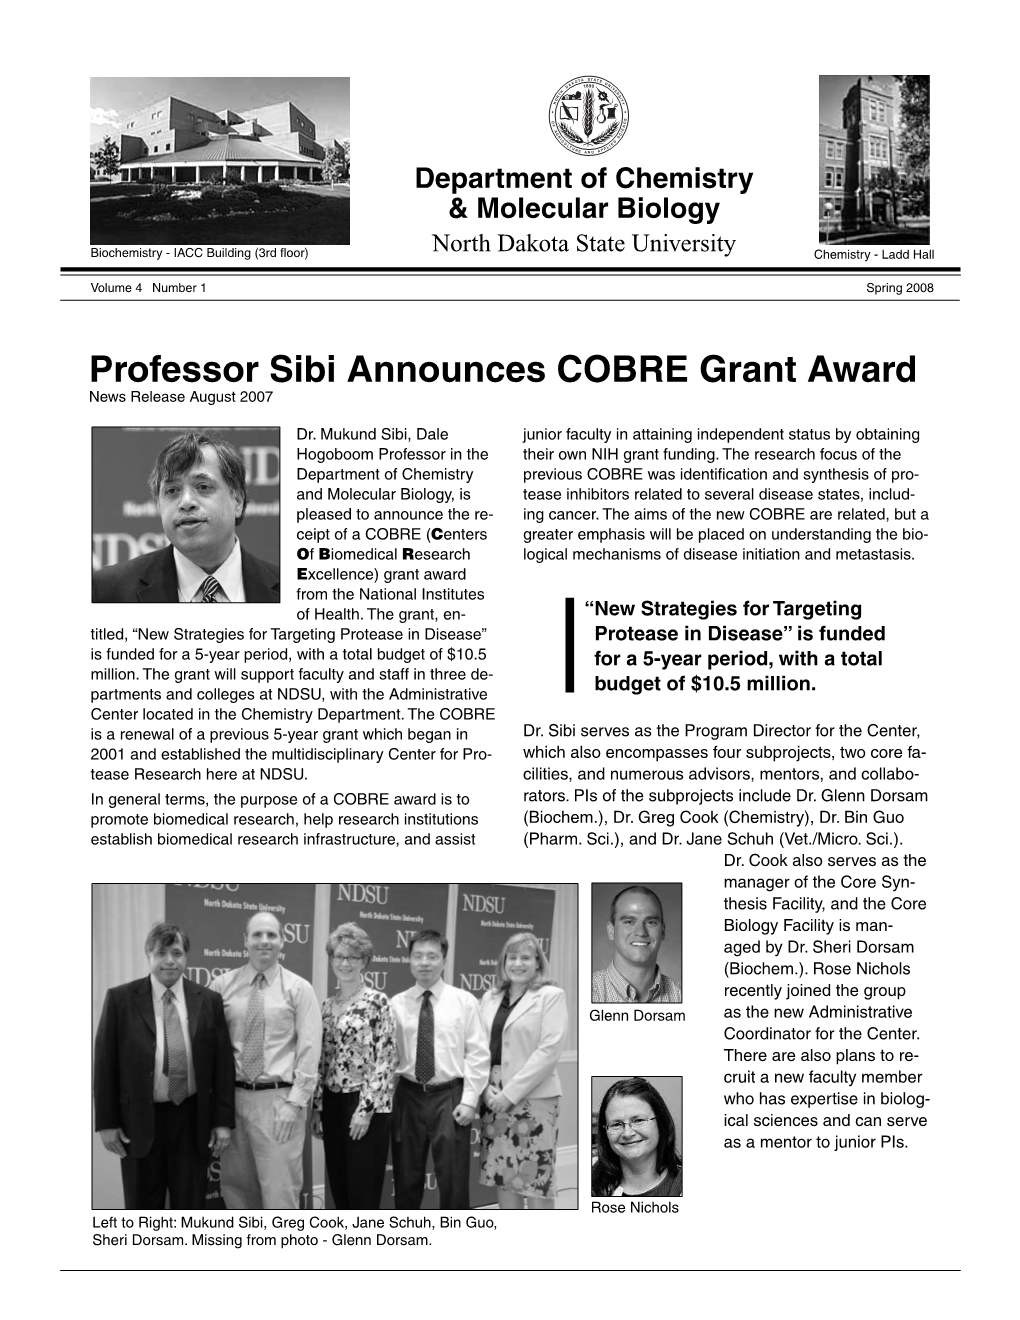 Professor Sibi Announces COBRE Grant Award News Release August 2007